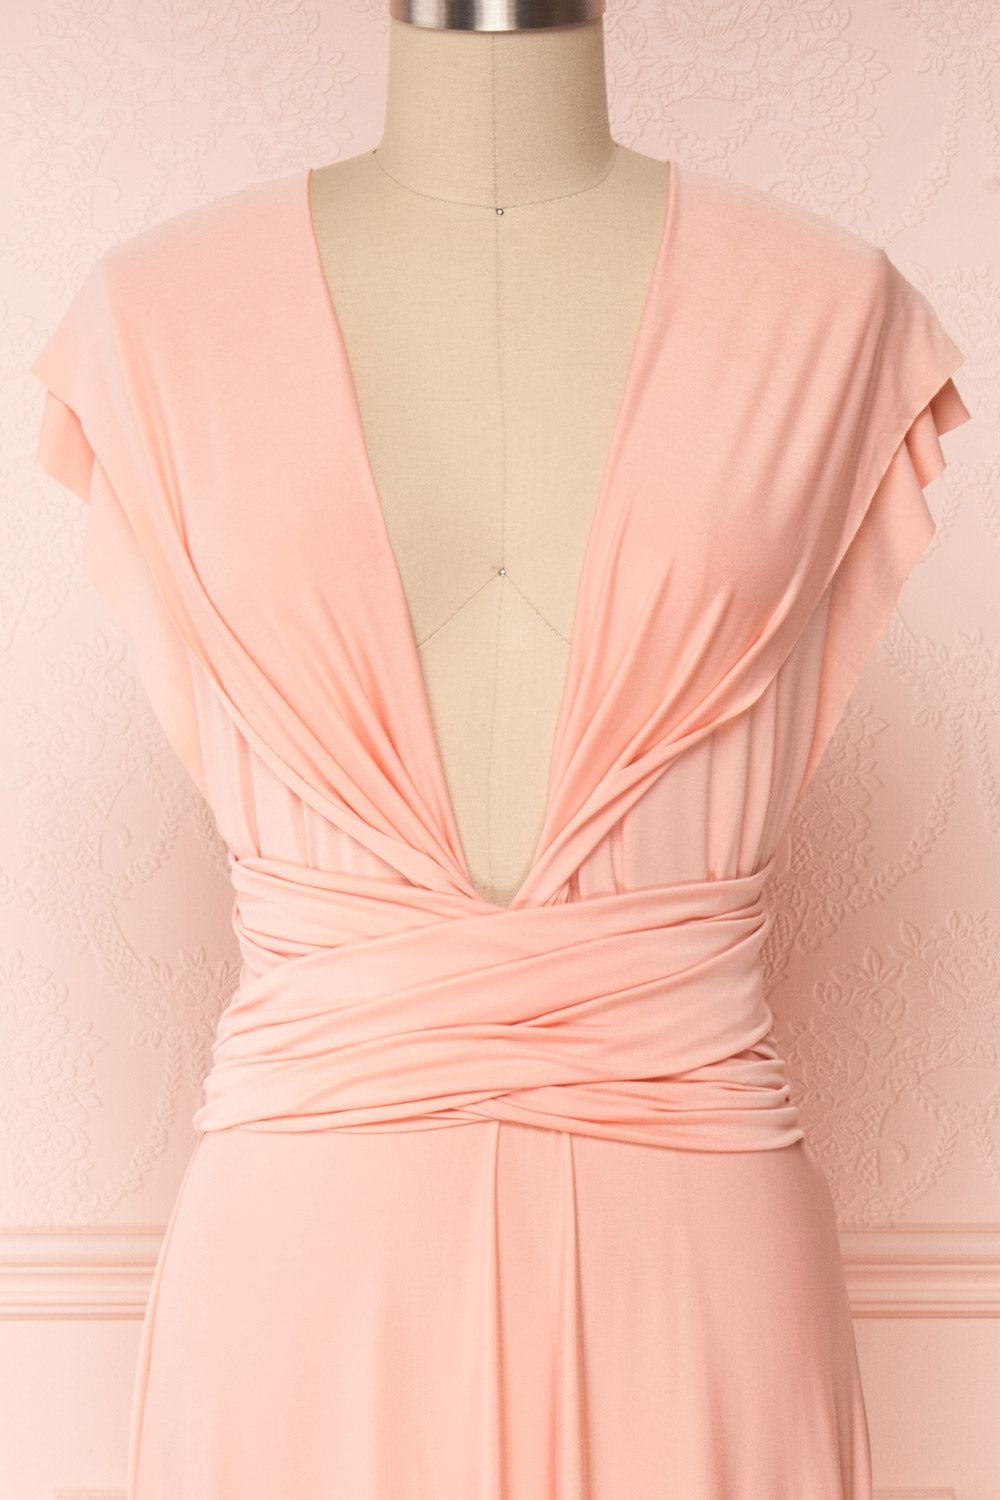 Elatia Blush Light Pink Convertible Dress front close up shoulder | Boudoir 1861 fourth look close-up